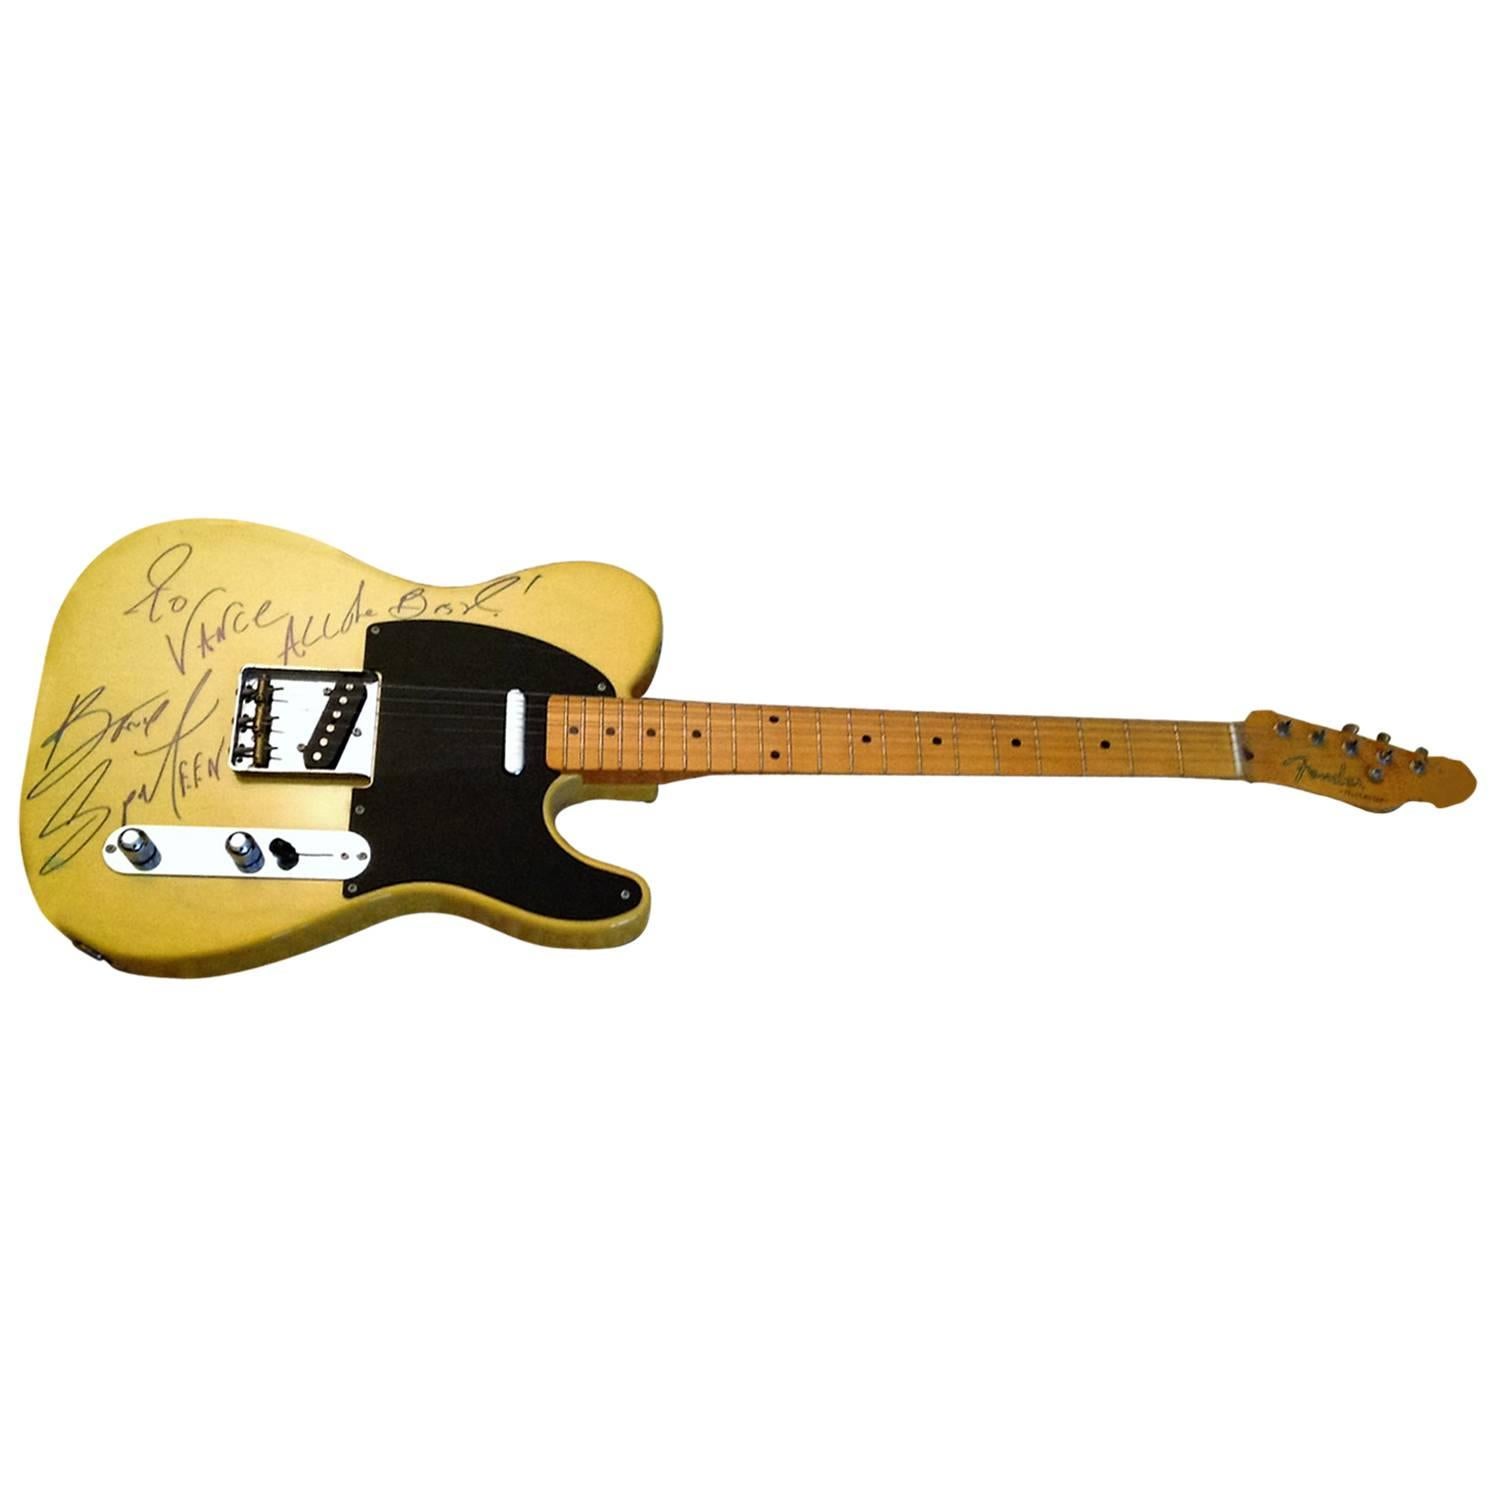 Fender Telecaster Guitar Autographed by Bruce Springsteen For Sale